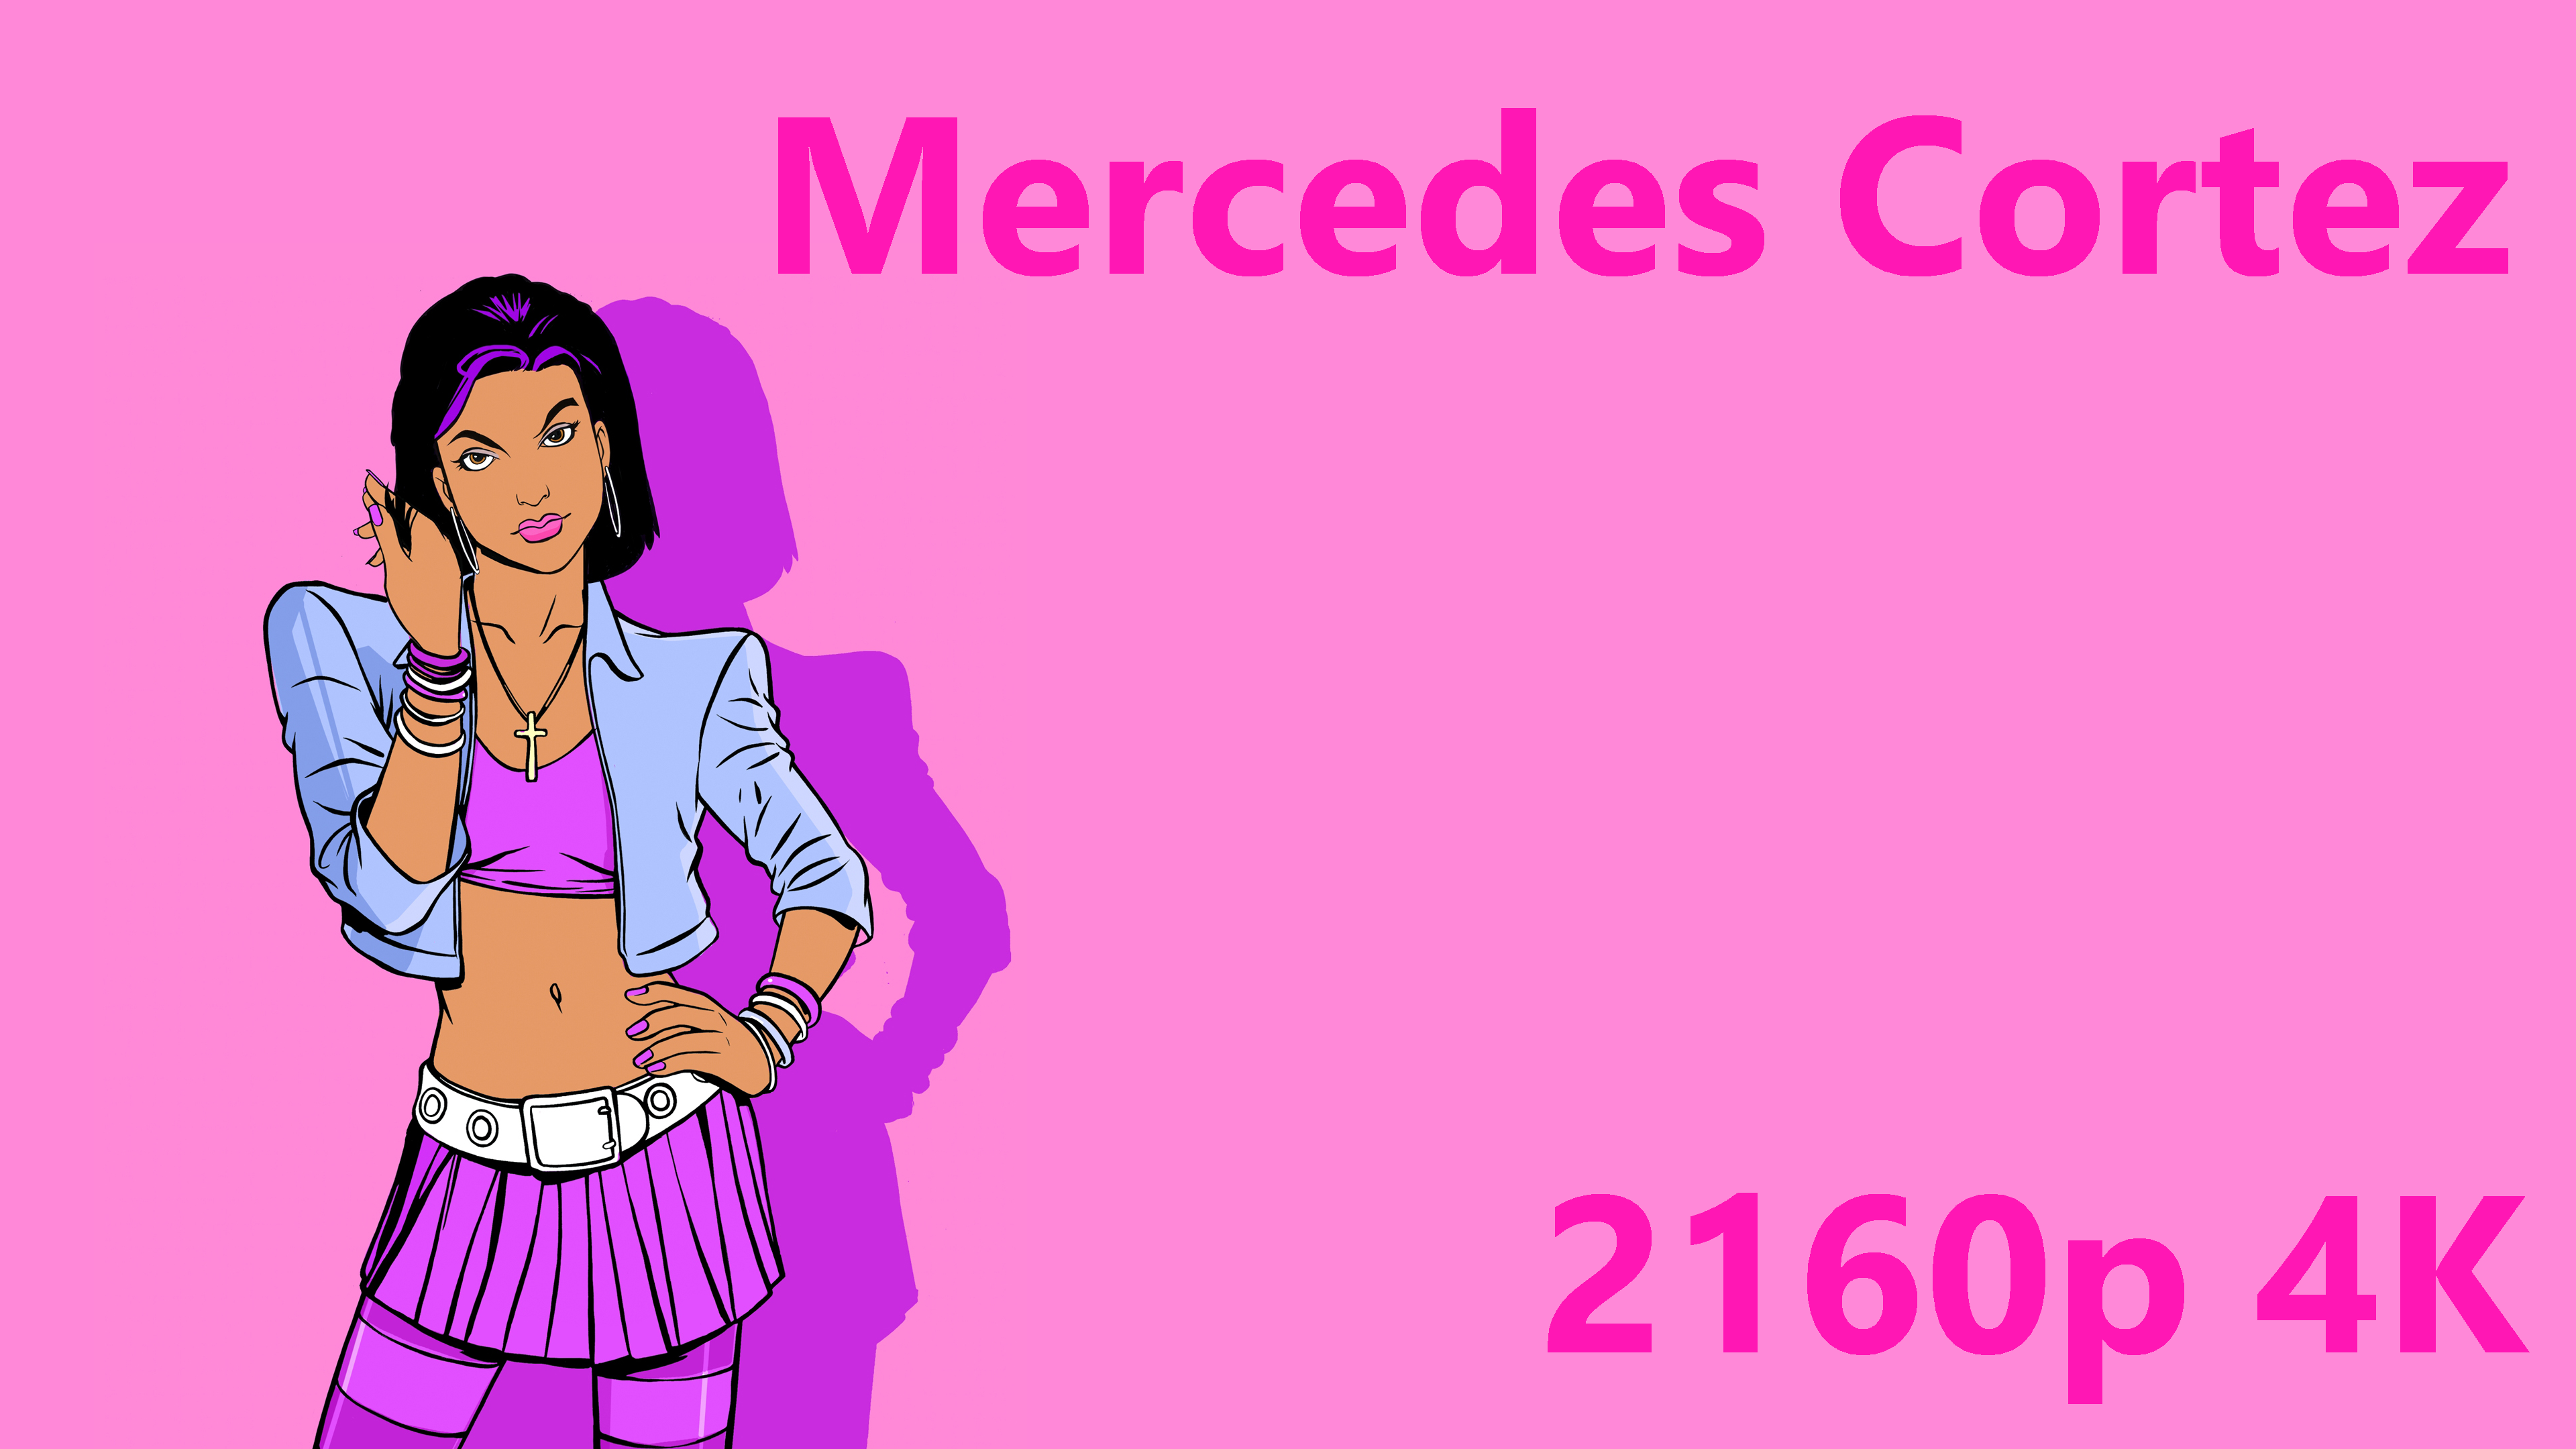 GTA Vice City Mercedes Cortez 2160p 4K.